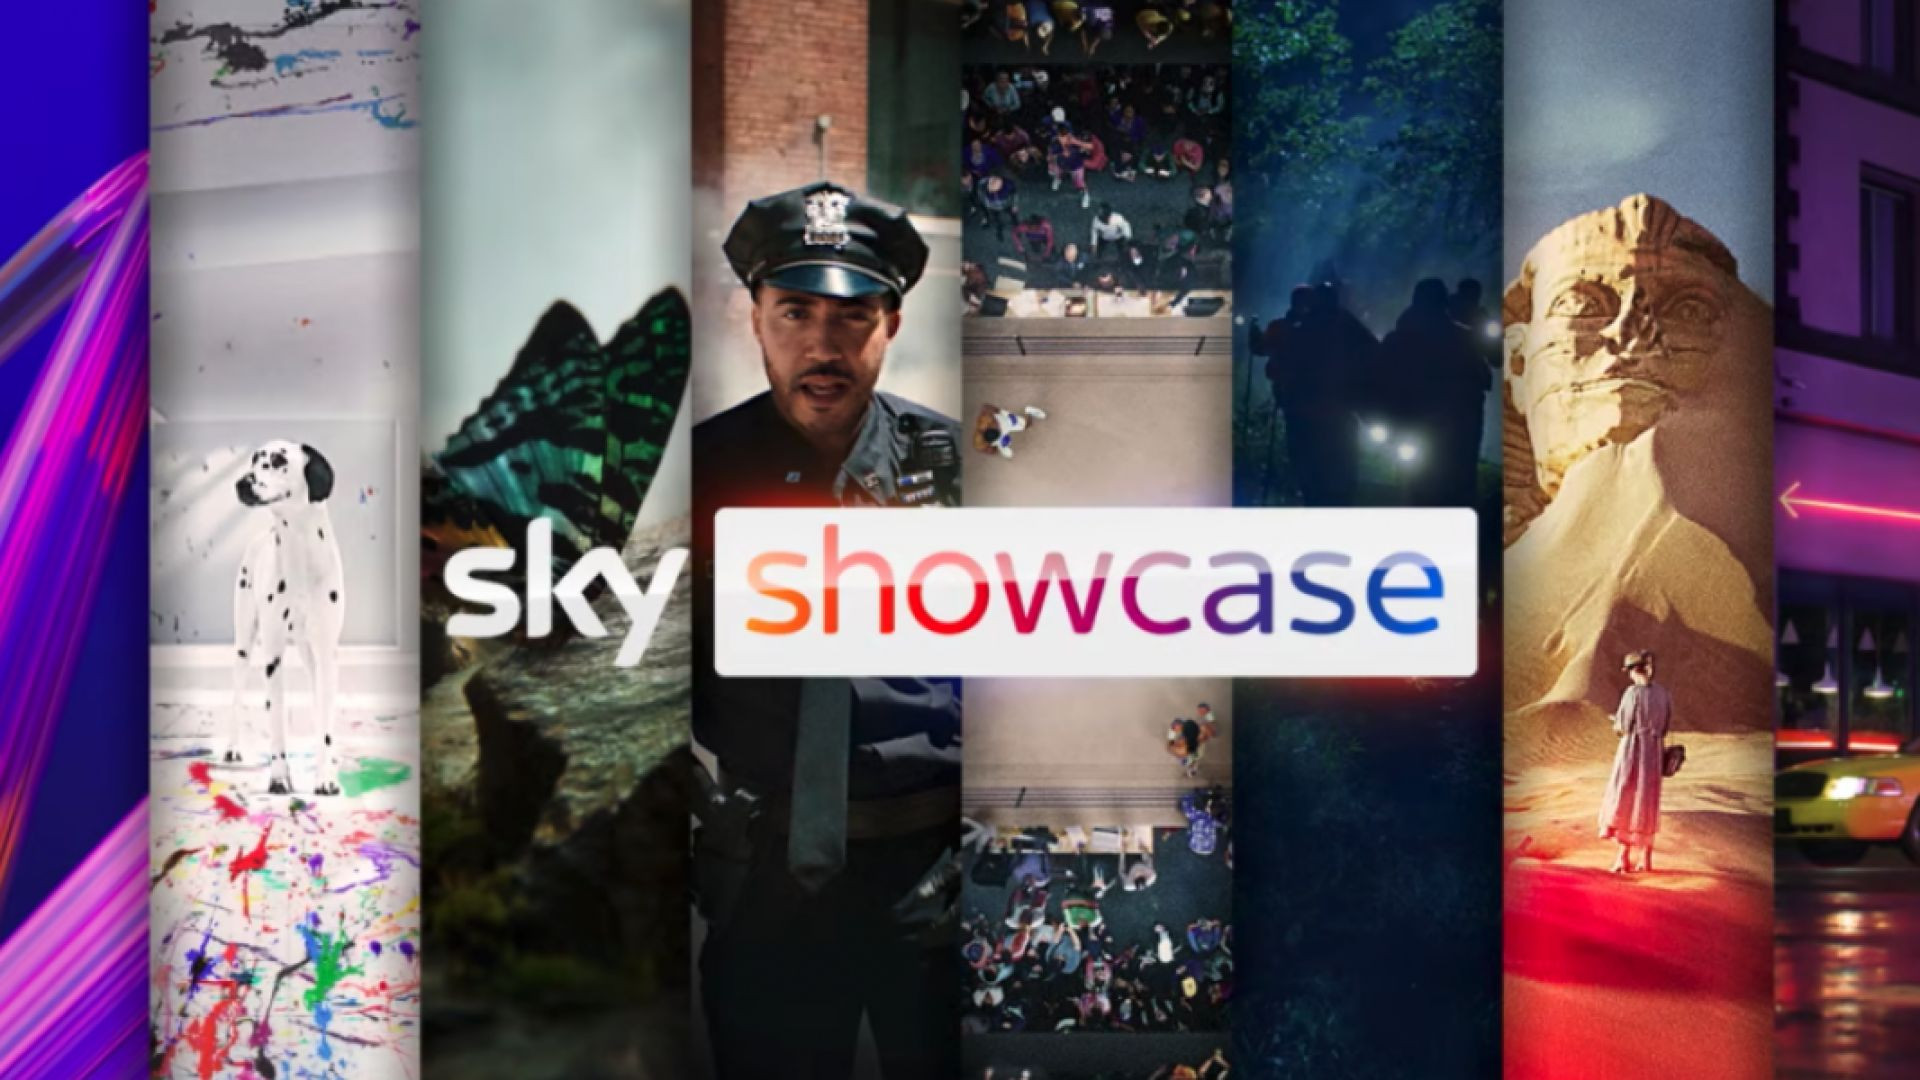 Sky showcase